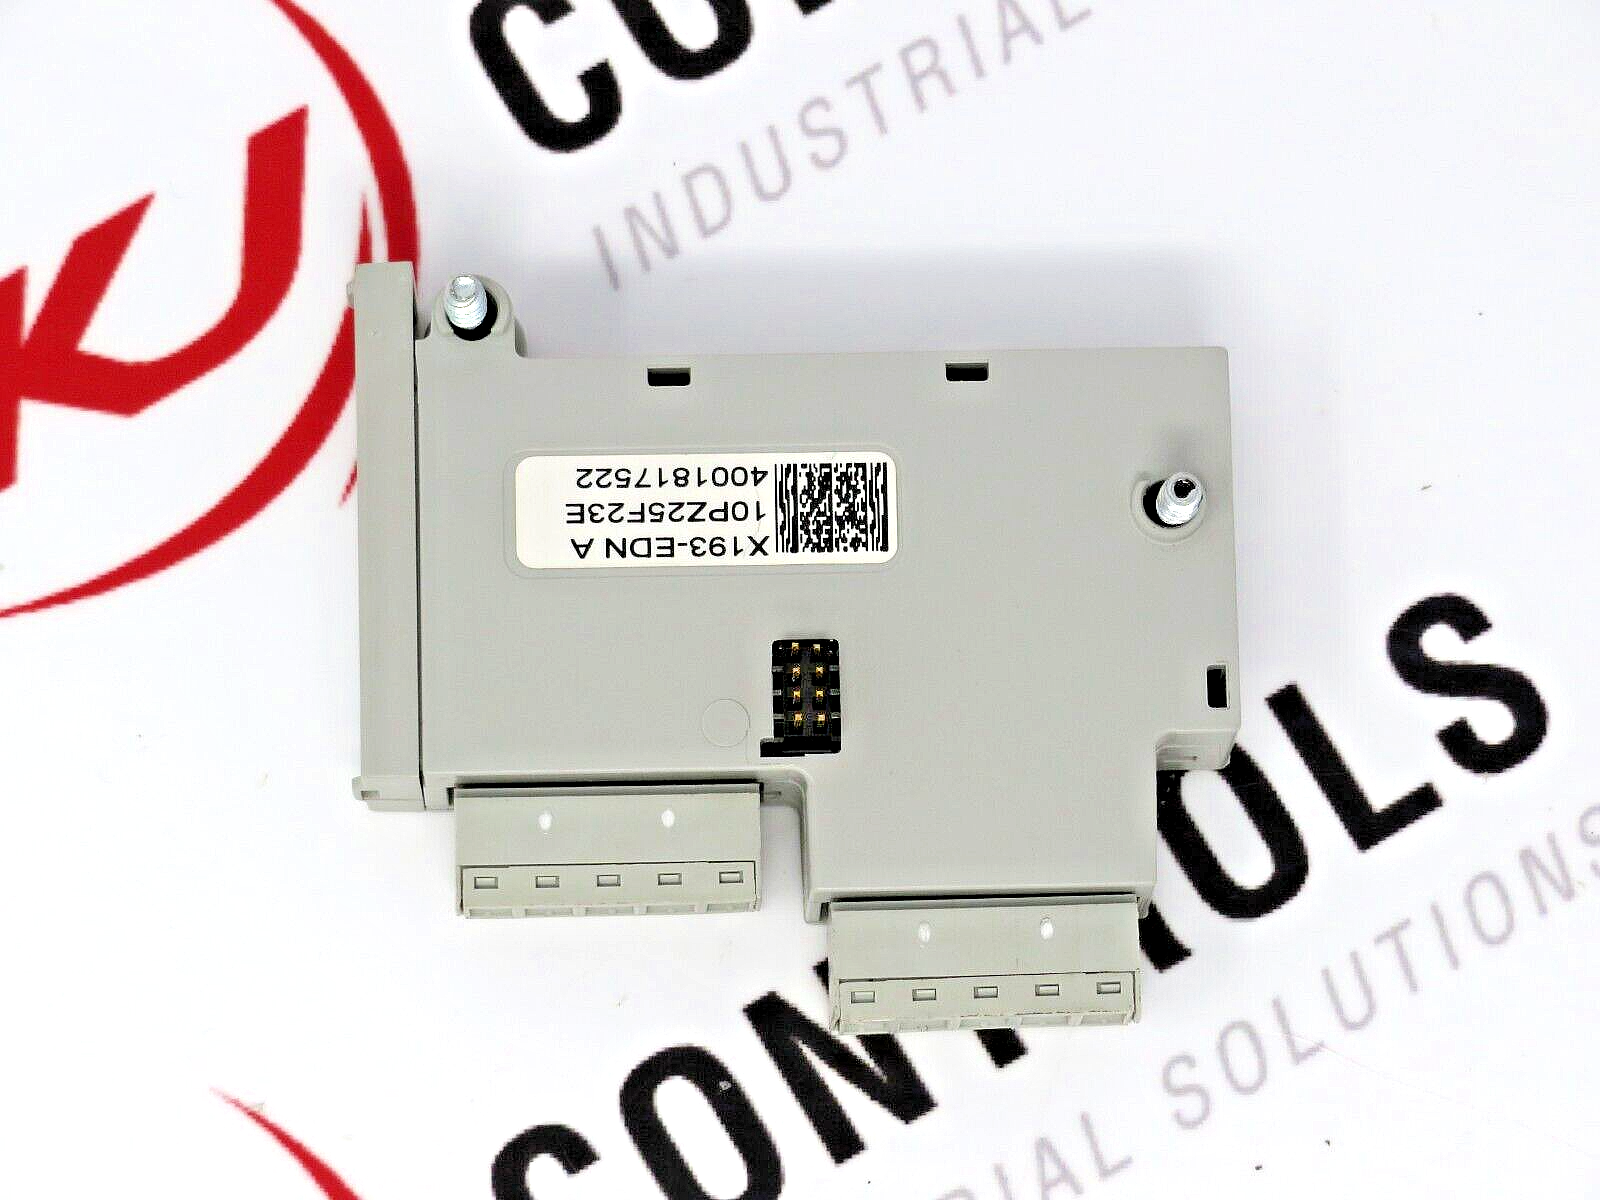 Allen-Bradley 193-EDN E1 Plus DeviceNet Module Side Mount 2-Input 1-Contact Out